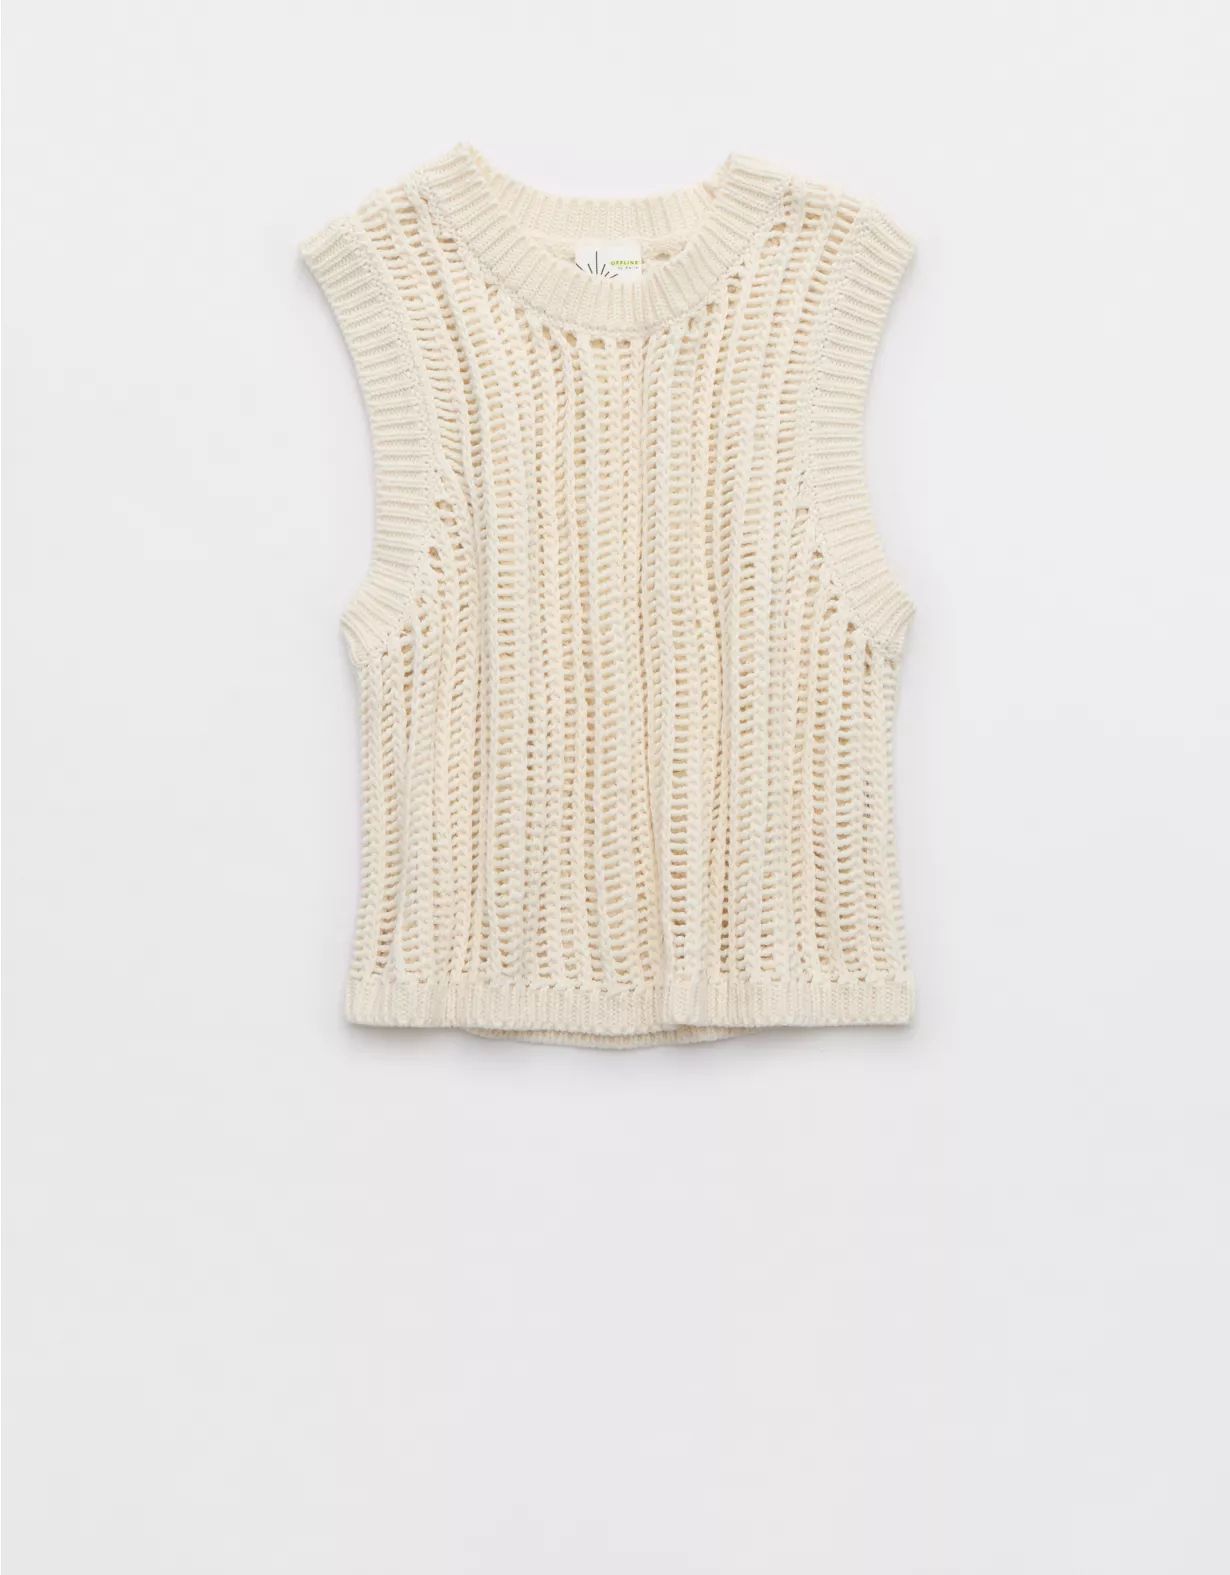 OFFLINE By Aerie Crochet Sweater Tank Top | Aerie